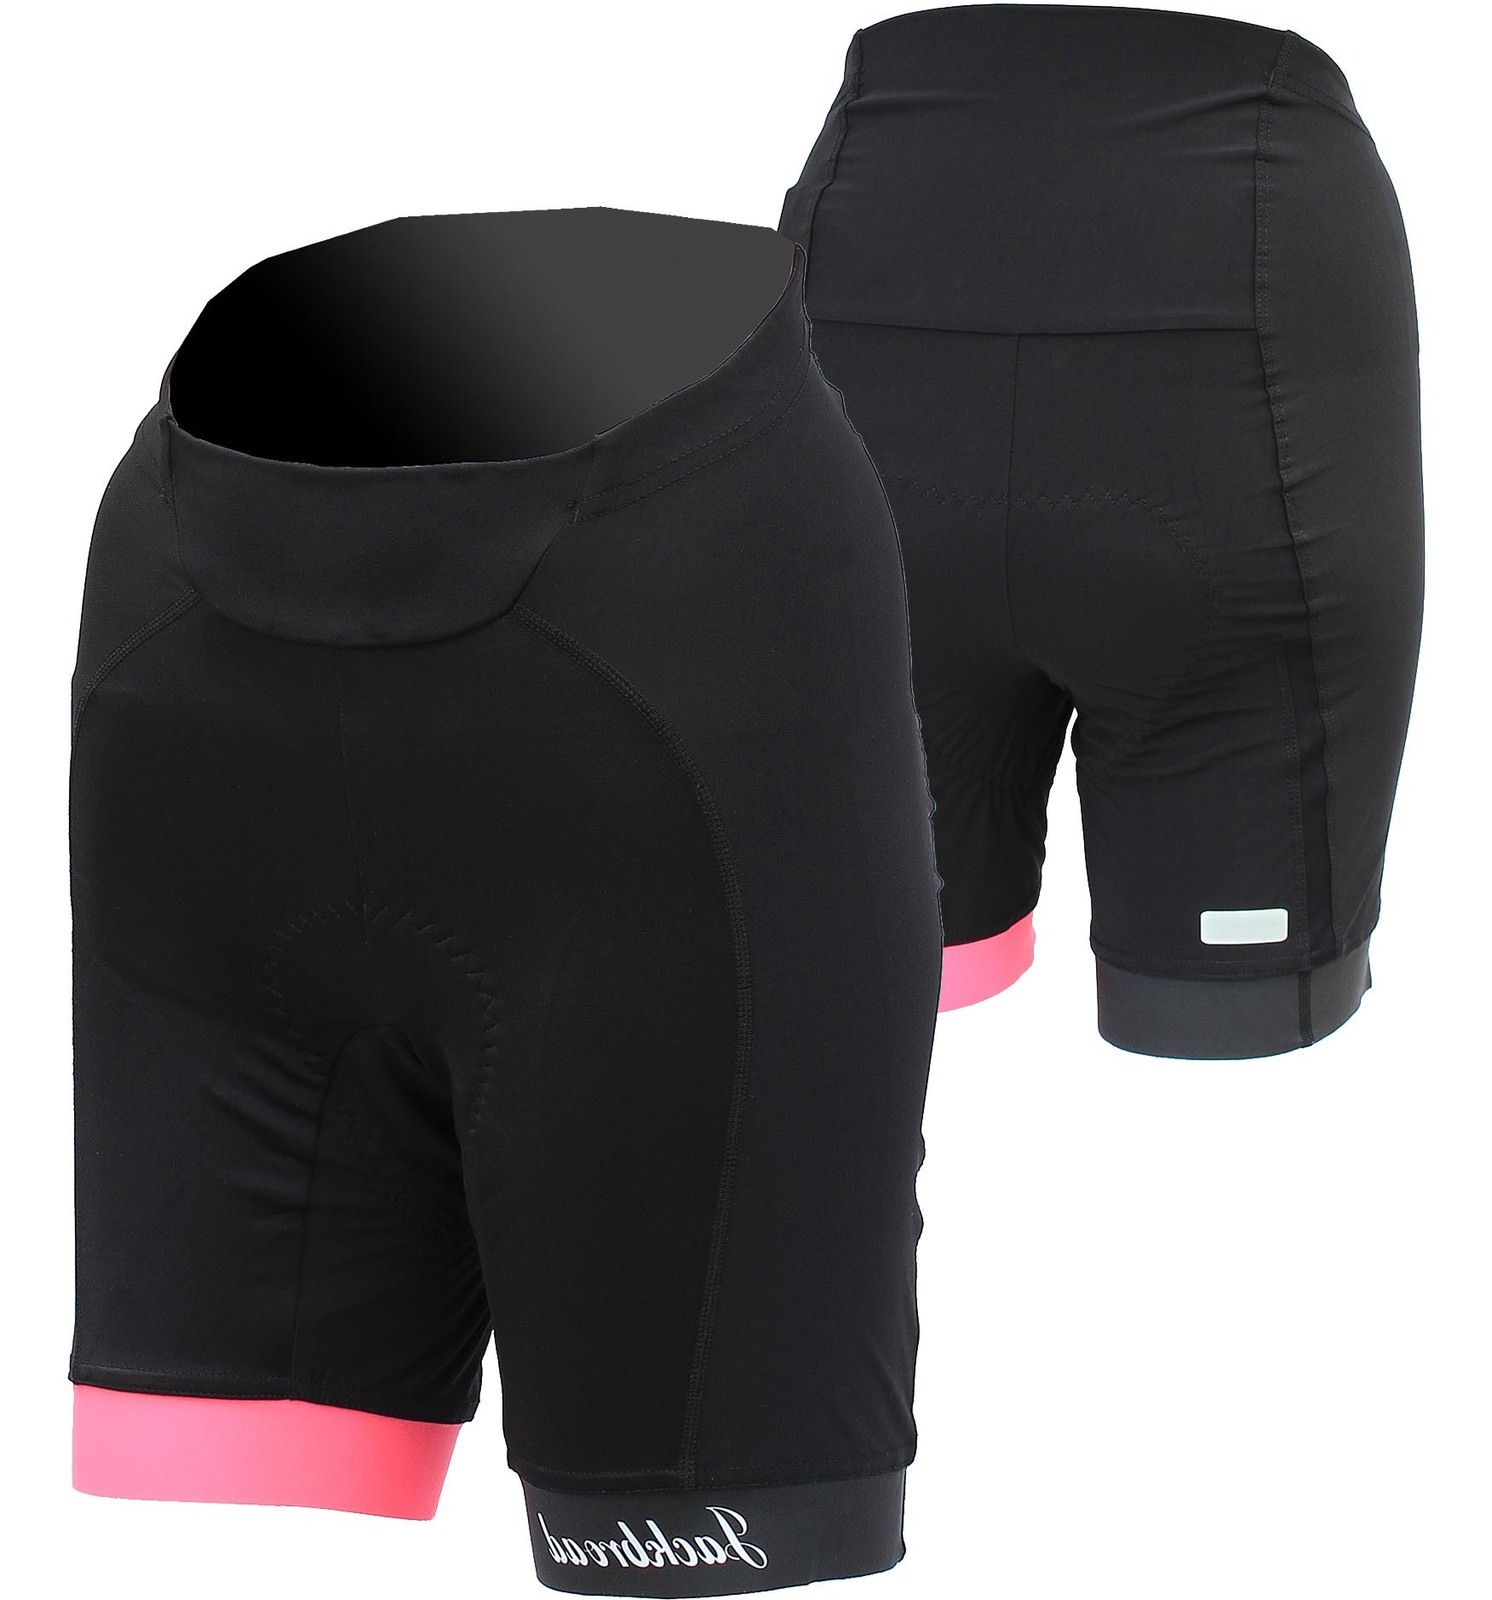 Jackbroad Premium Quality Cycling Padded Shorts Black Pink XXL